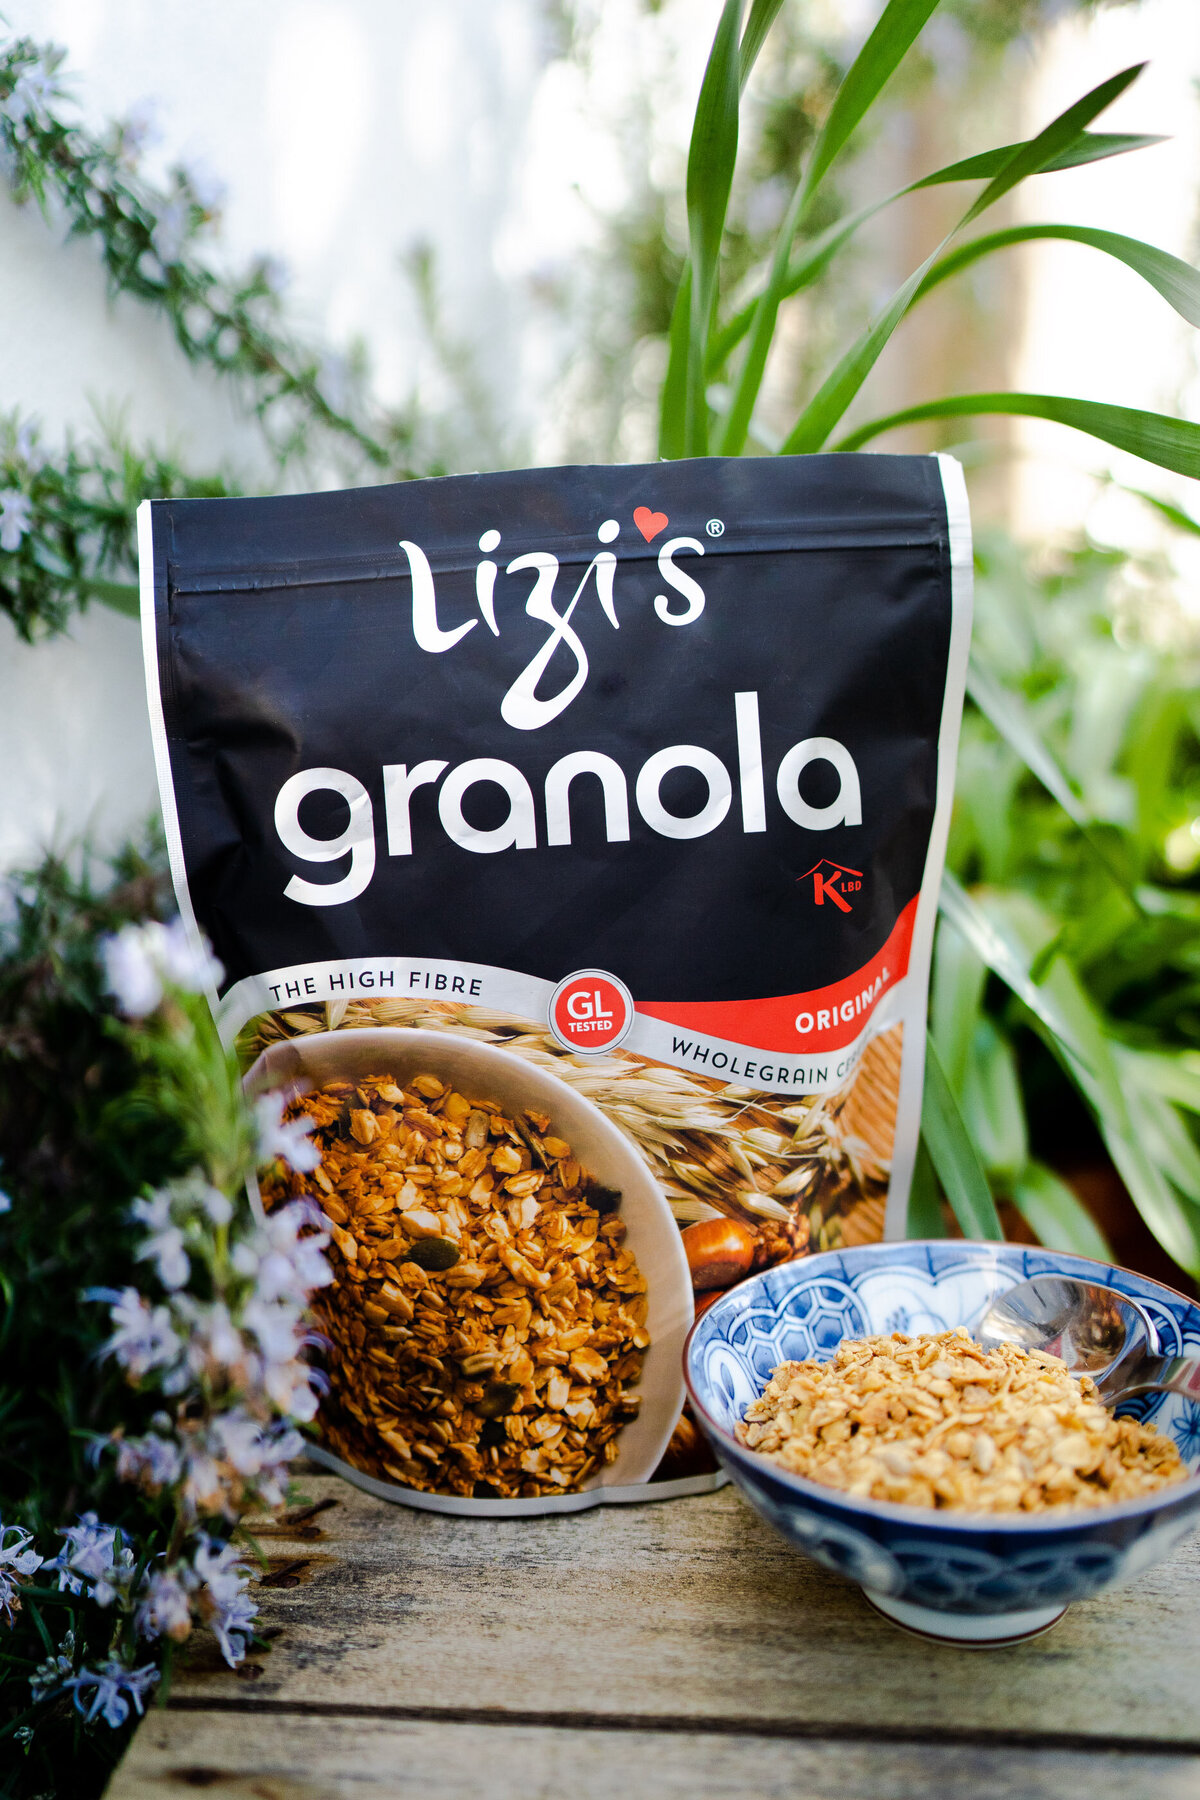 Lizi's Granola. Product Photographer Leeds